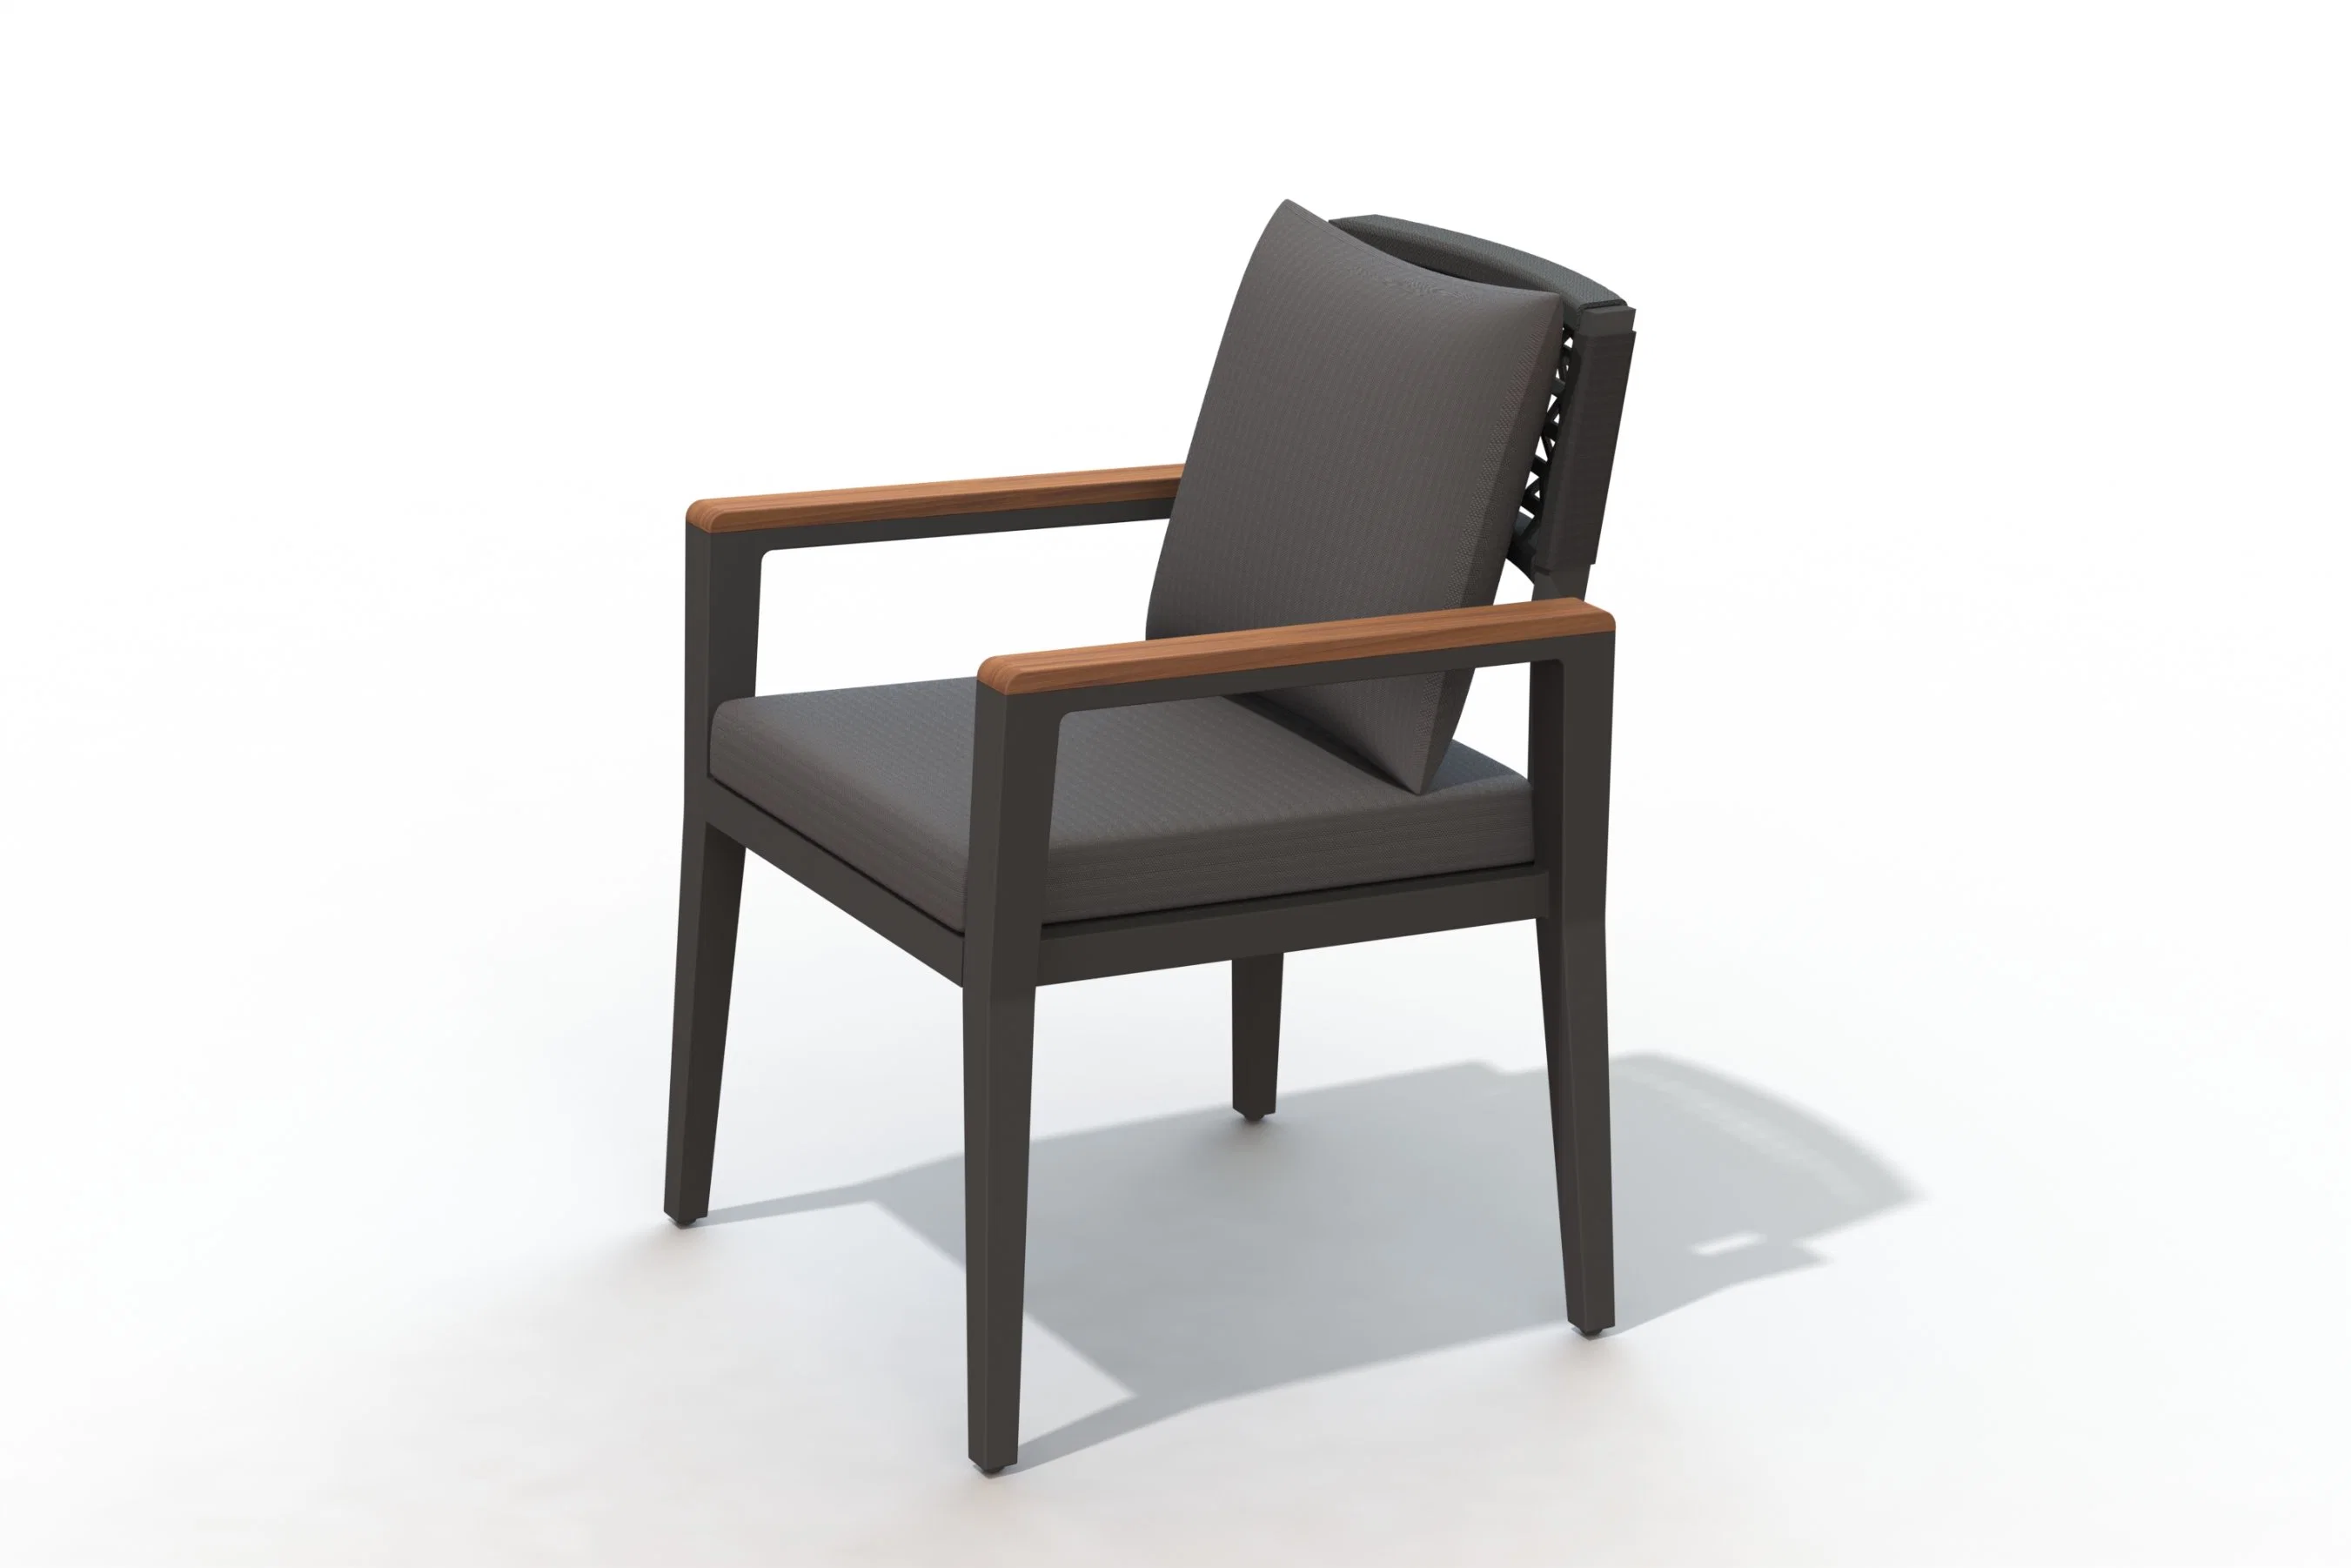 Modern Garden Sets Outdoor Teak Table Rattan Furniture Chair Suits